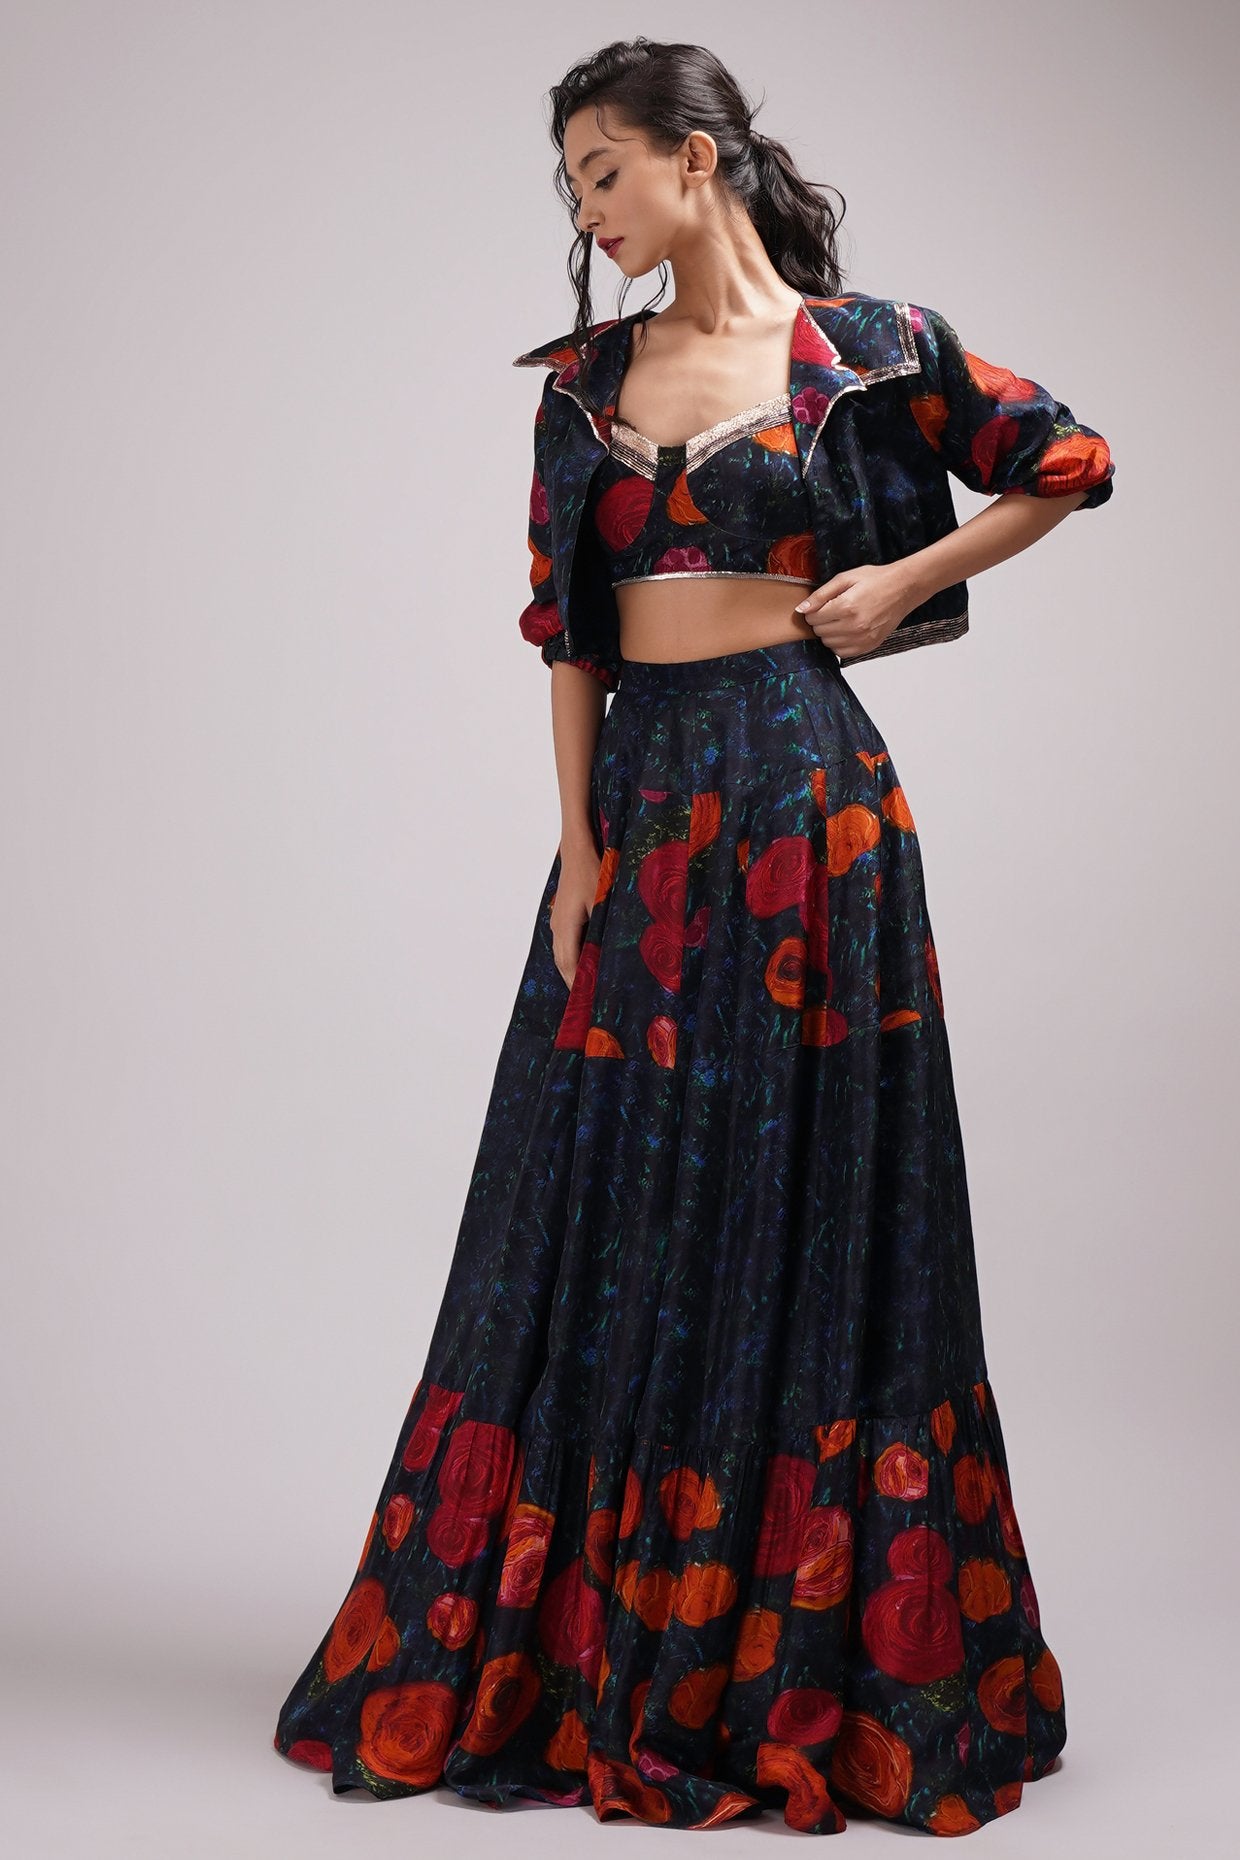 Gopi Skirts – Radha Govinda's Fashions - Gopi Skirt Outfits